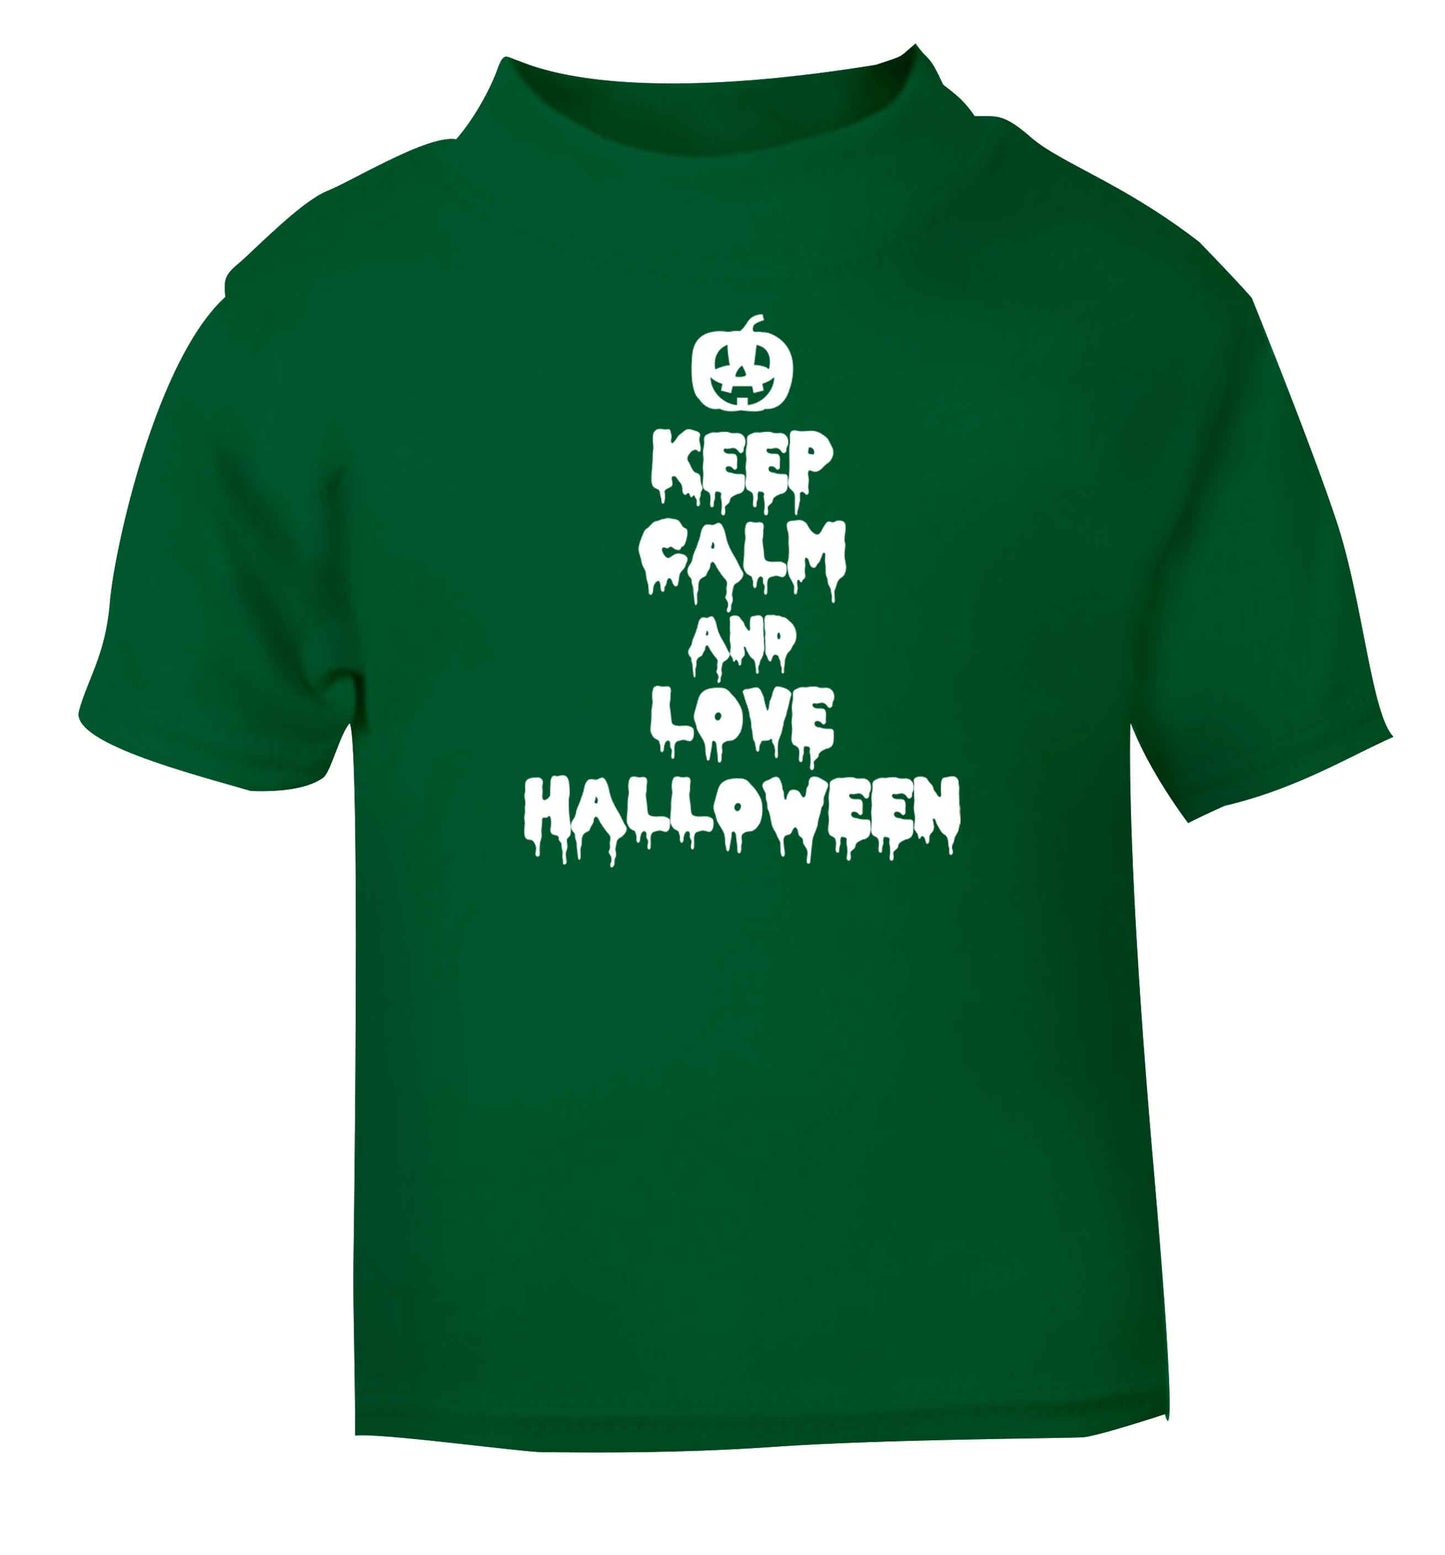 Keep calm and love halloween green baby toddler Tshirt 2 Years